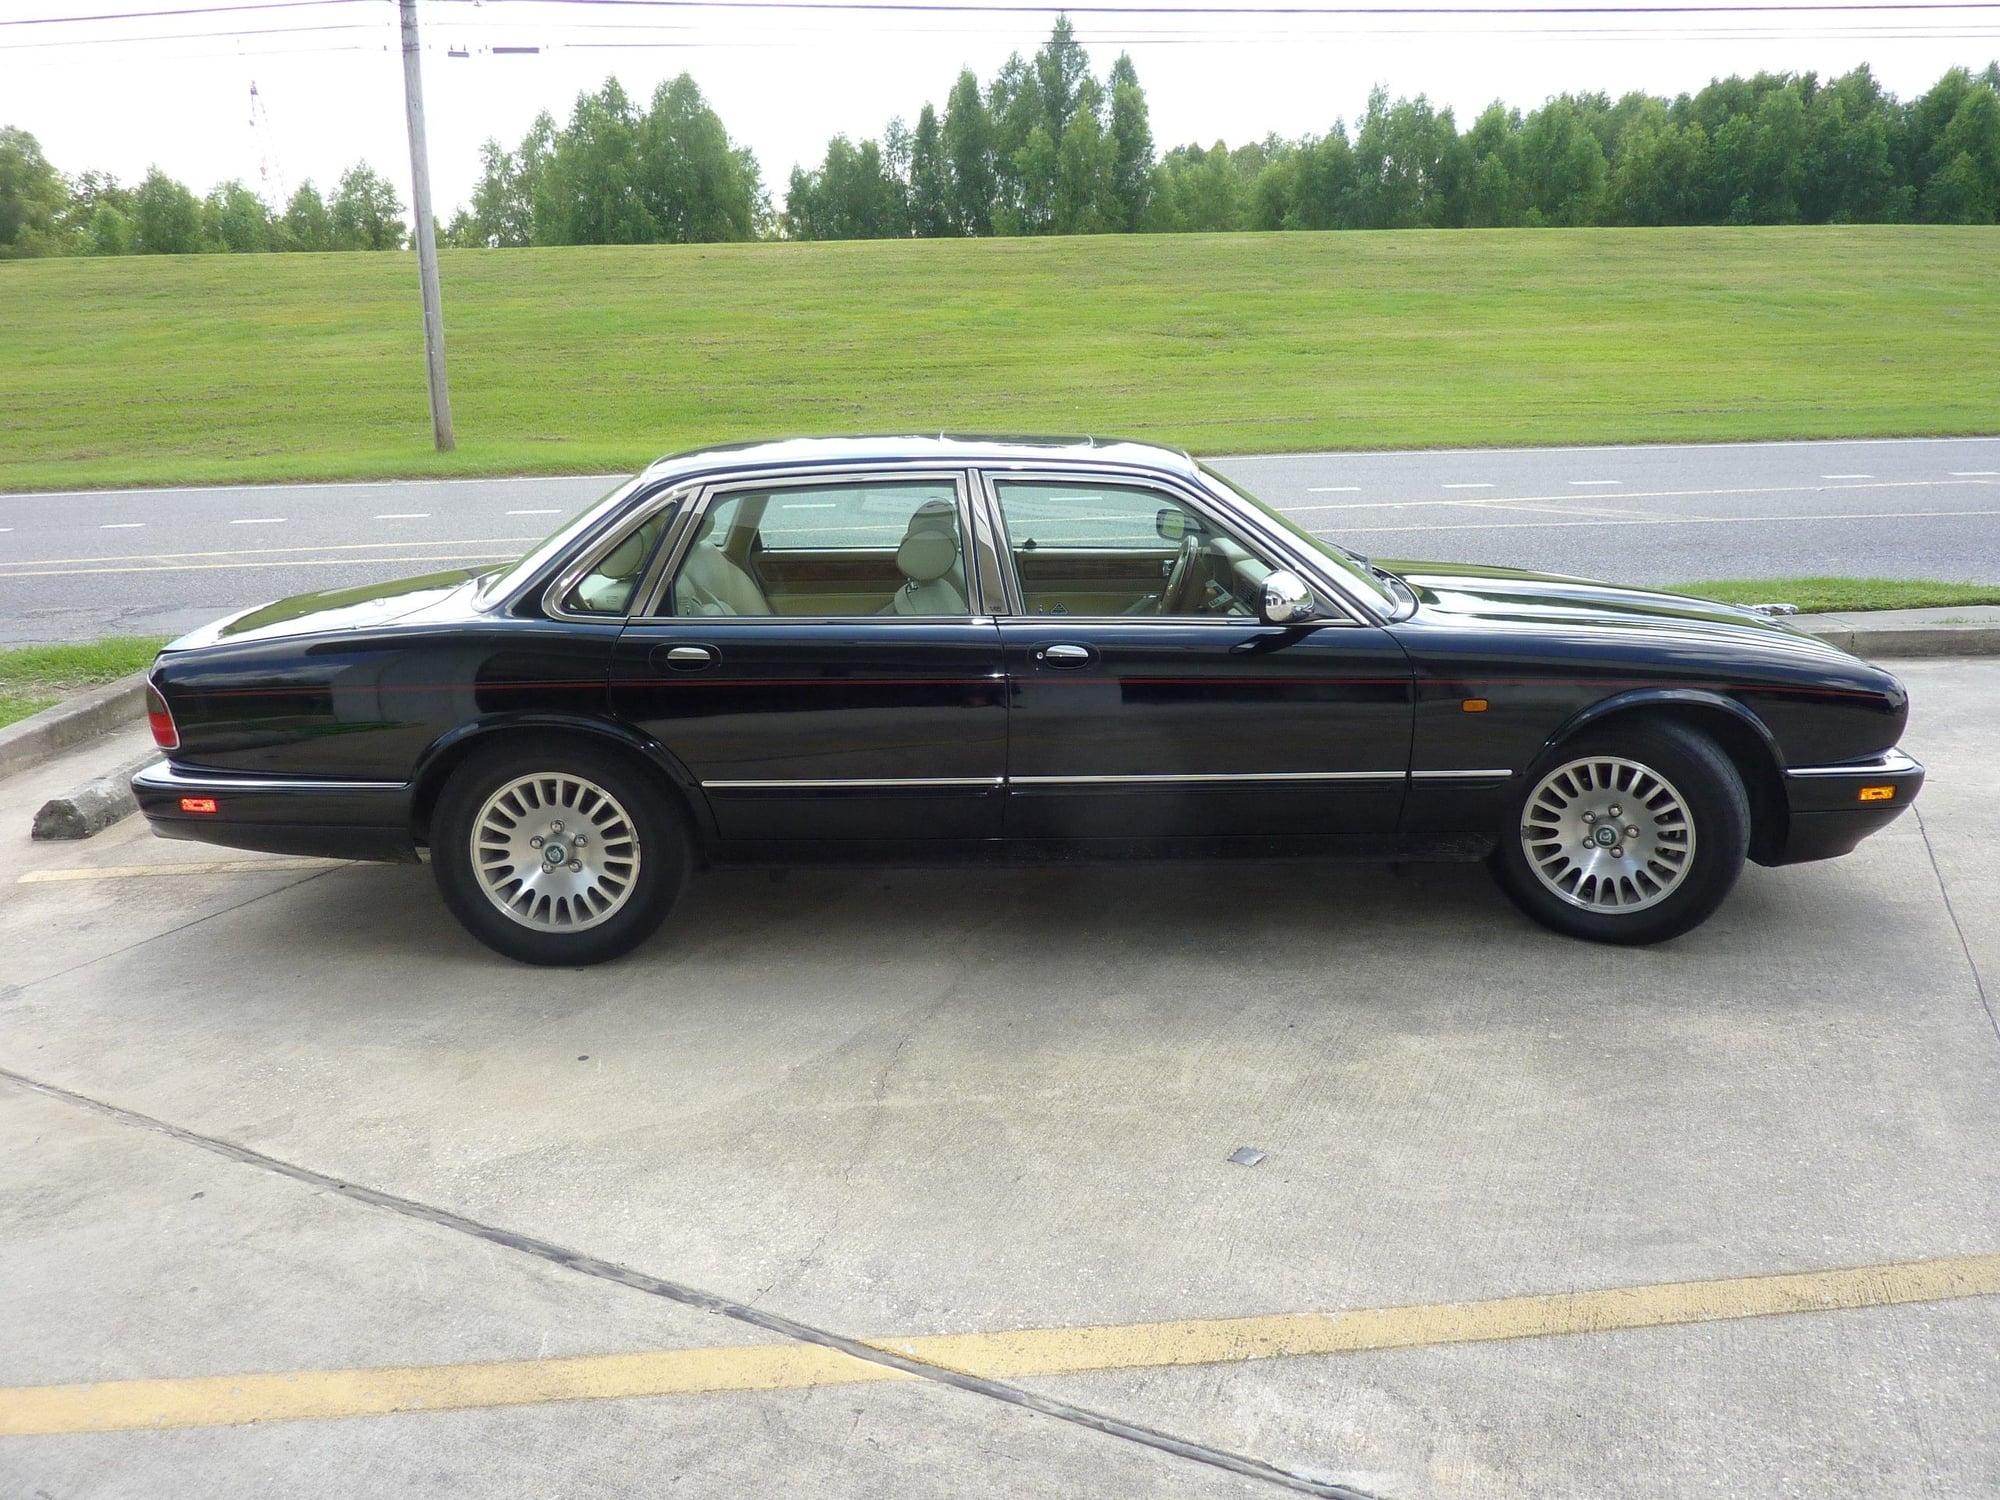 1995 Jaguar XJ12 - Black XJ12 with Cream leather interior - Used - VIN SAJMX1348SC720716 - 62,000 Miles - 12 cyl - 2WD - Automatic - Sedan - Black - New Orleans, LA 70124, United States